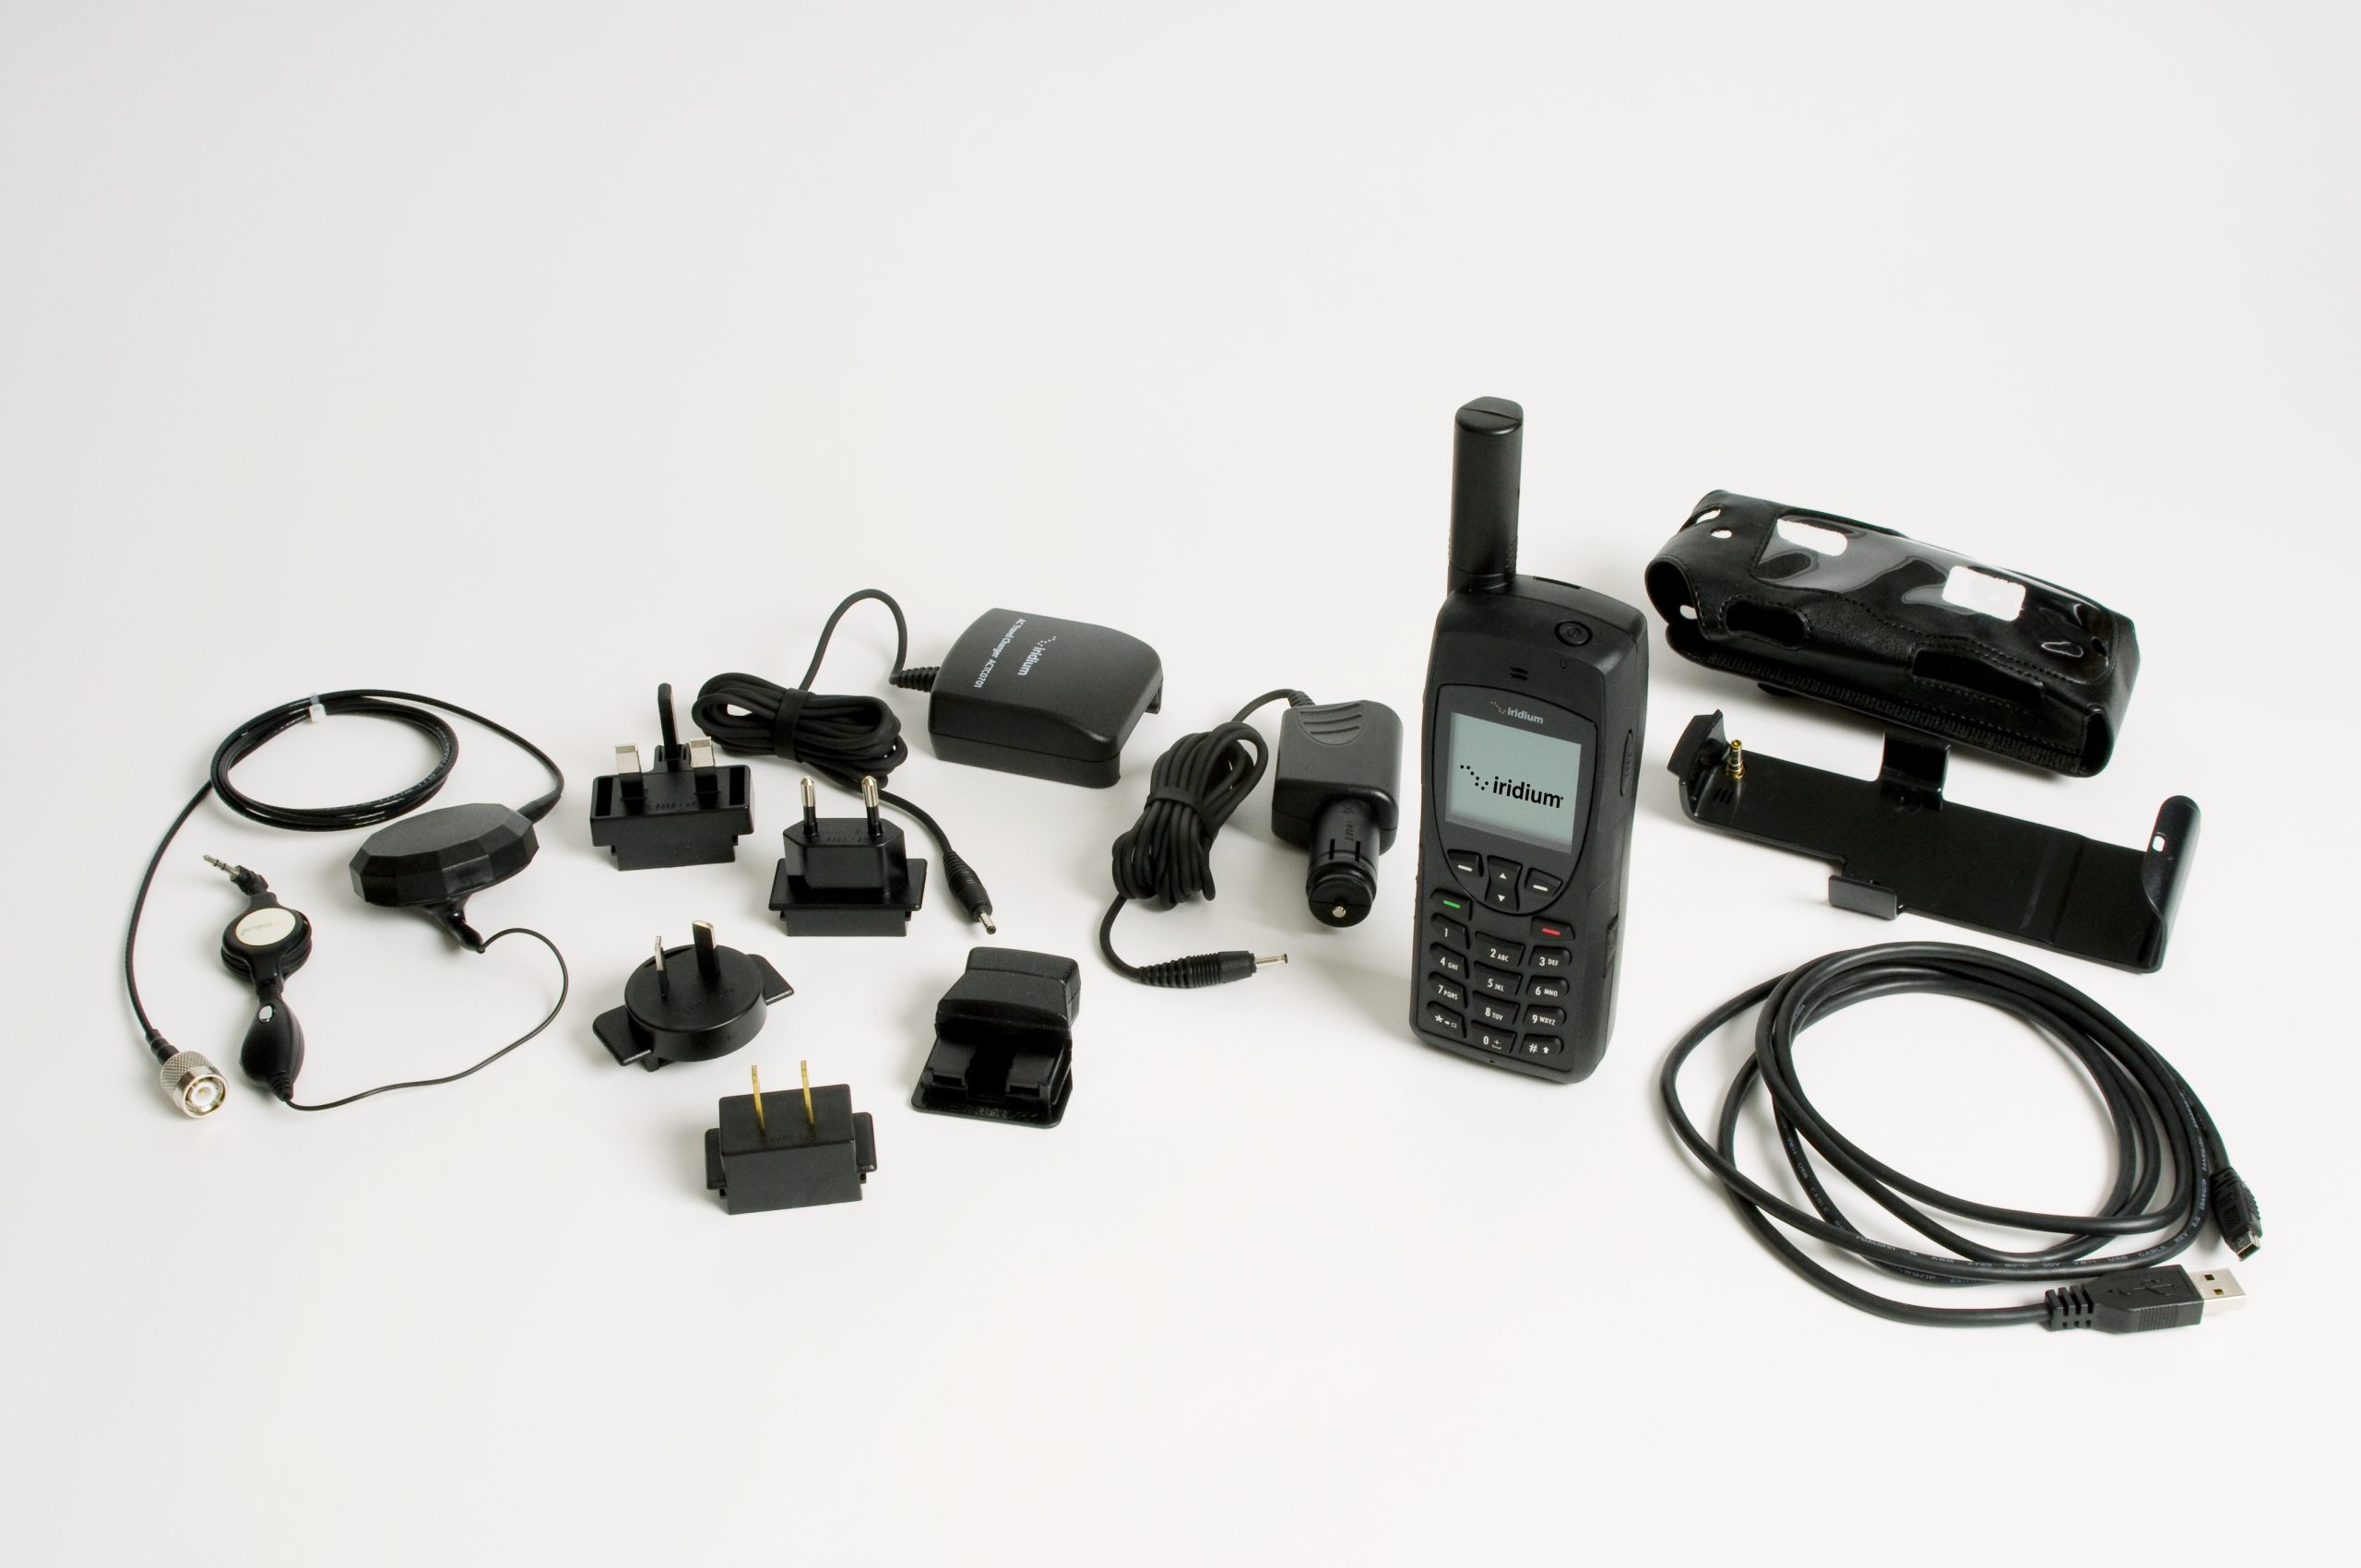 9555 Satellite Phone | Iridium Satellite Communications